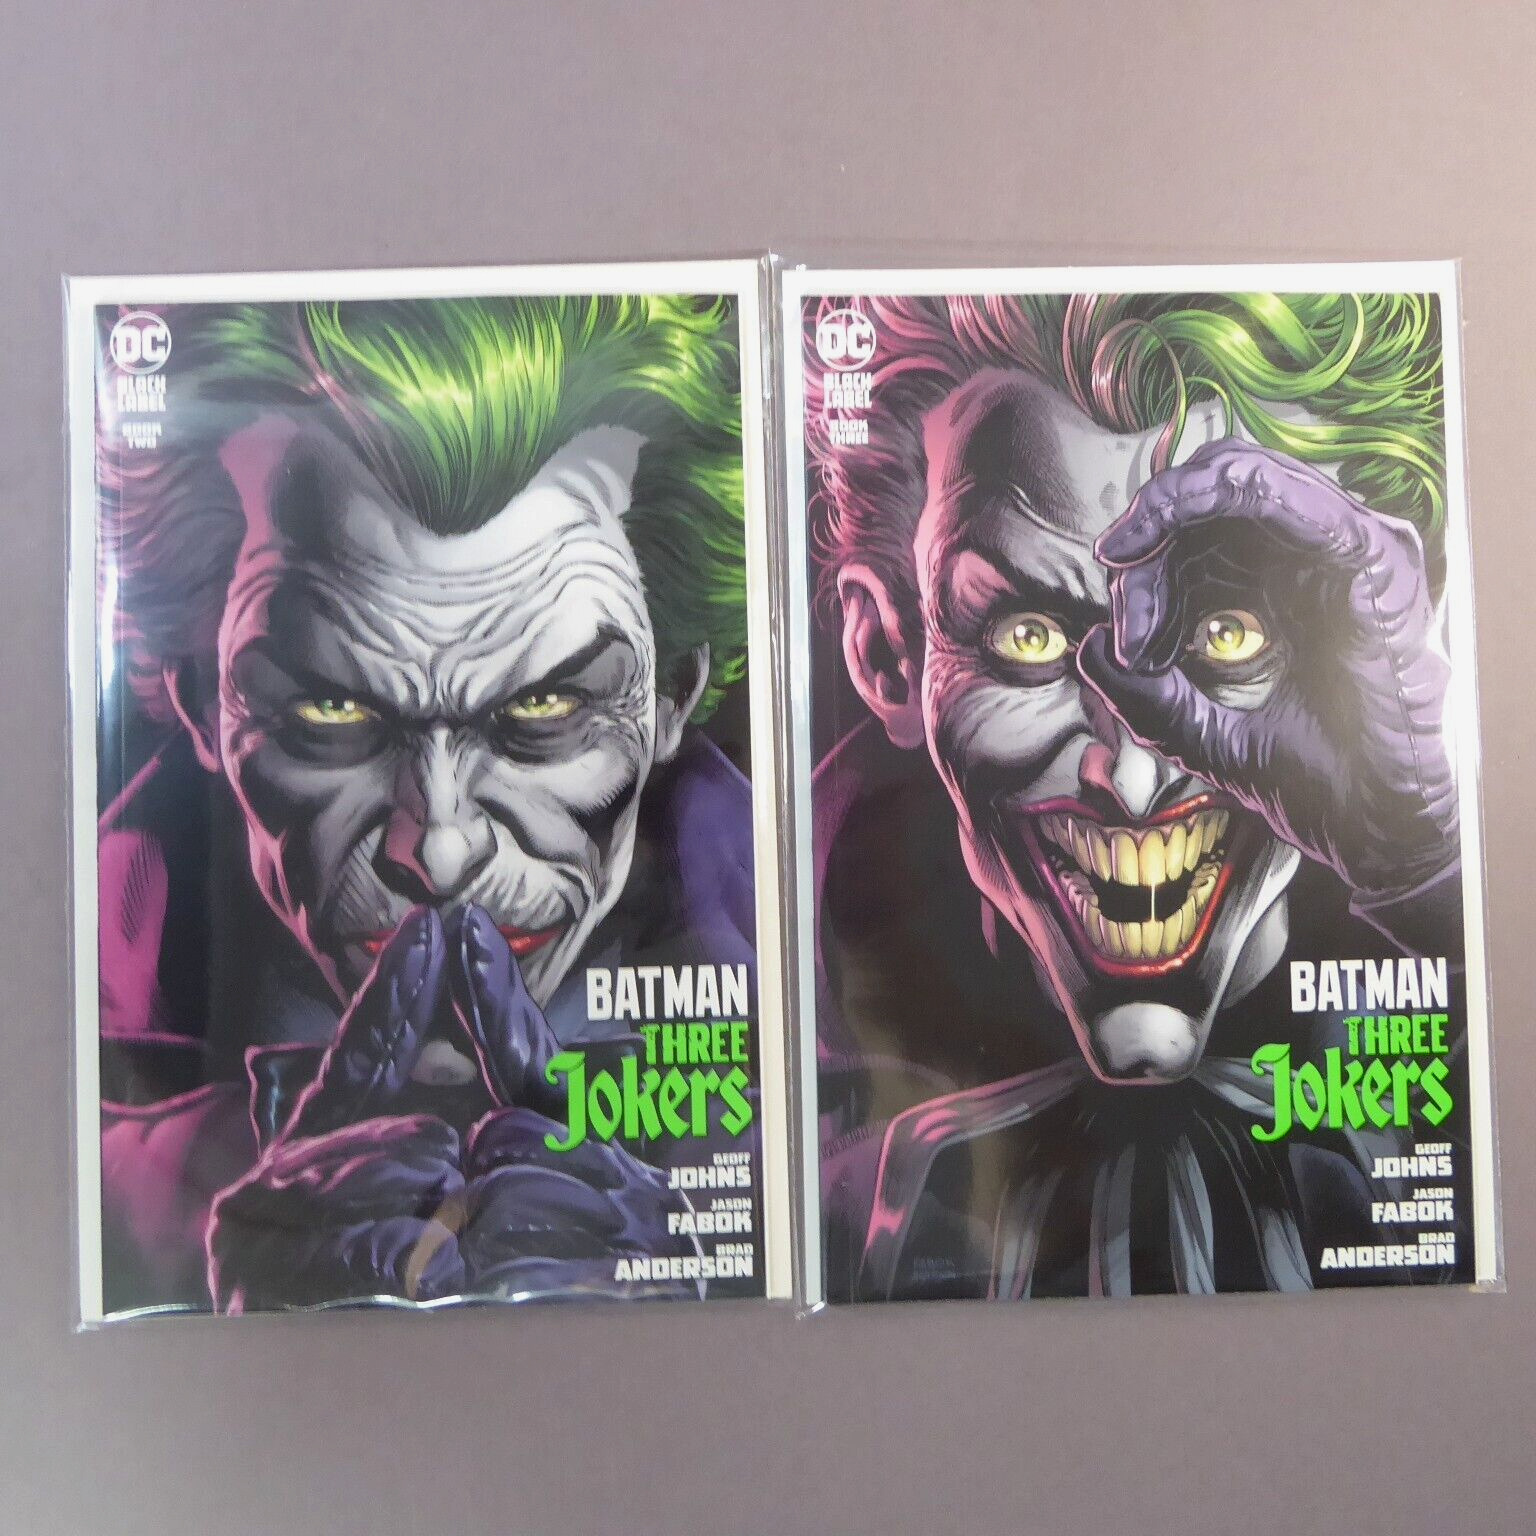 Batman Three Jokers Lot of 2 DC Black Label Comics Geoff Johns, Fabok